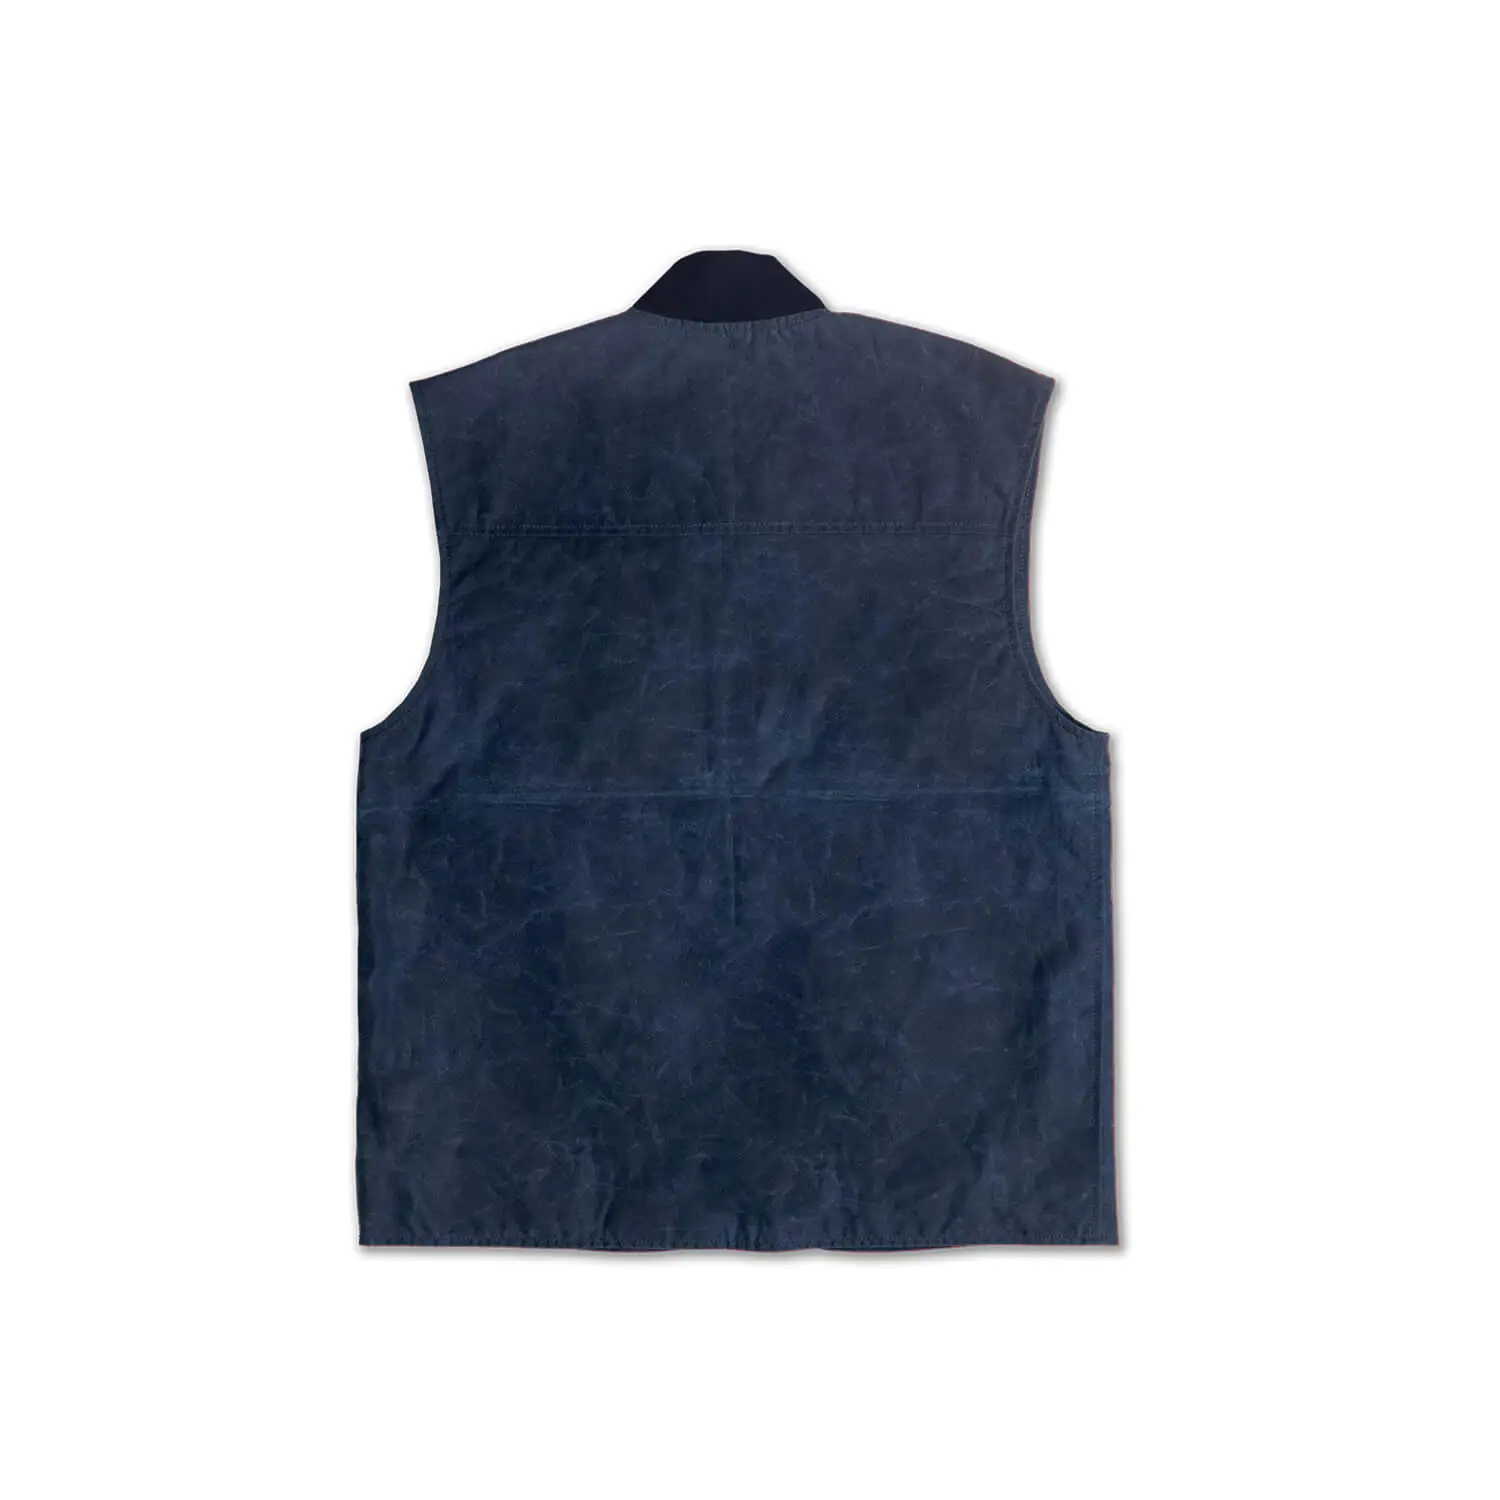 dmd.eu - GILET BLUE DMD – Gilet blue cotton waxed – back